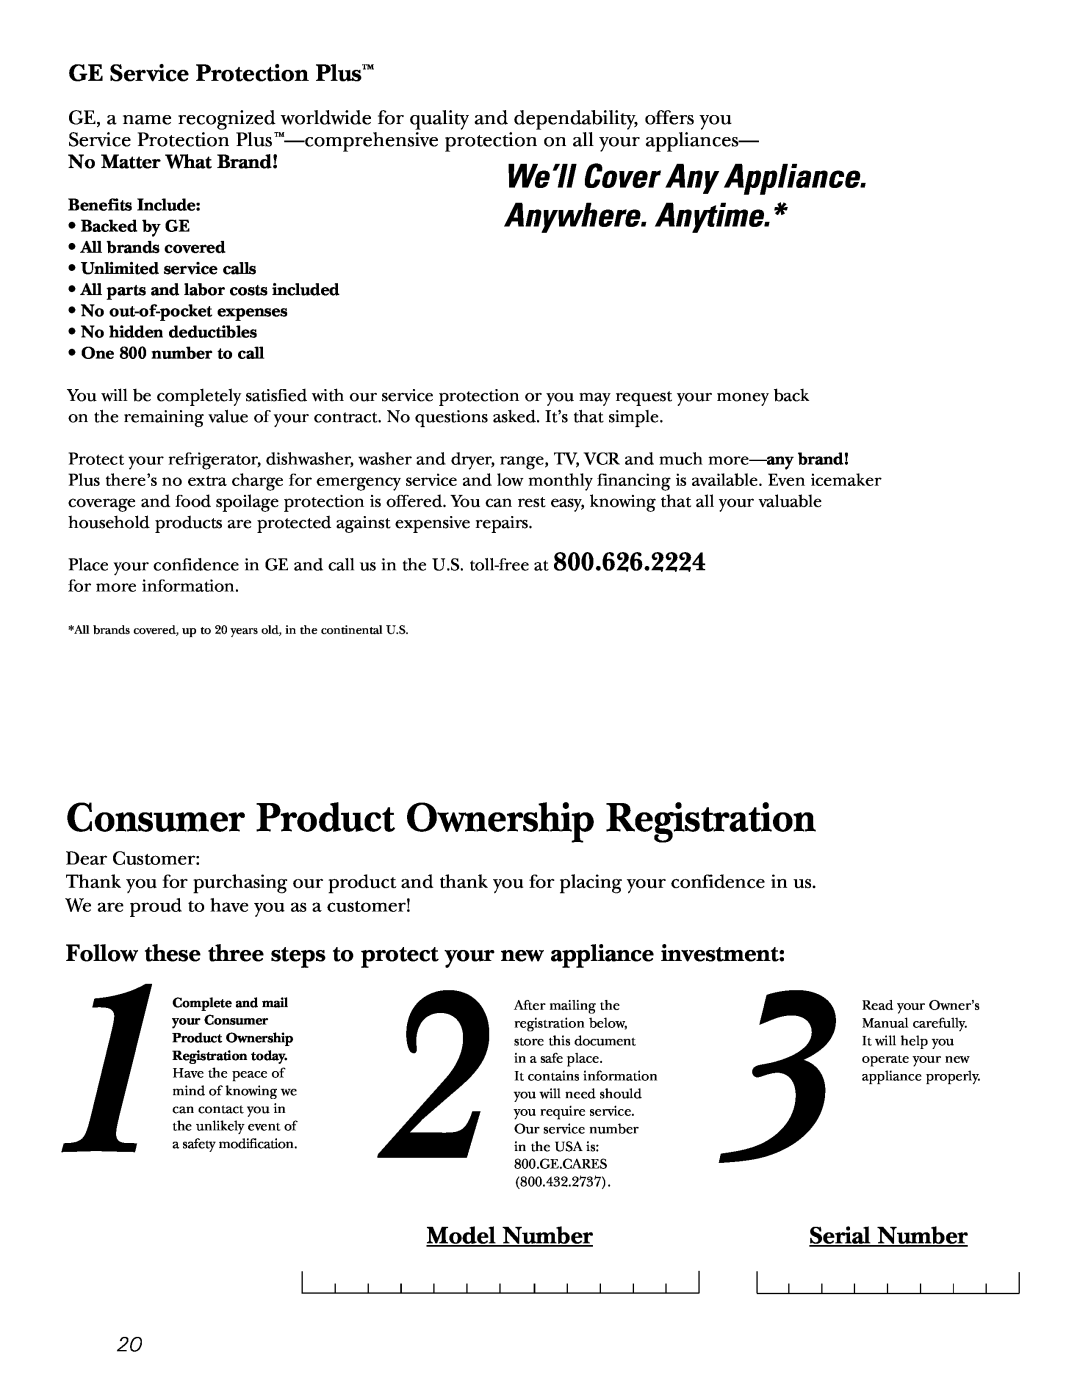 GE 20 manuel dutilisation Consumer Product Ownership Registration, GE Service Protection Plus, Model Number, Serial Number 